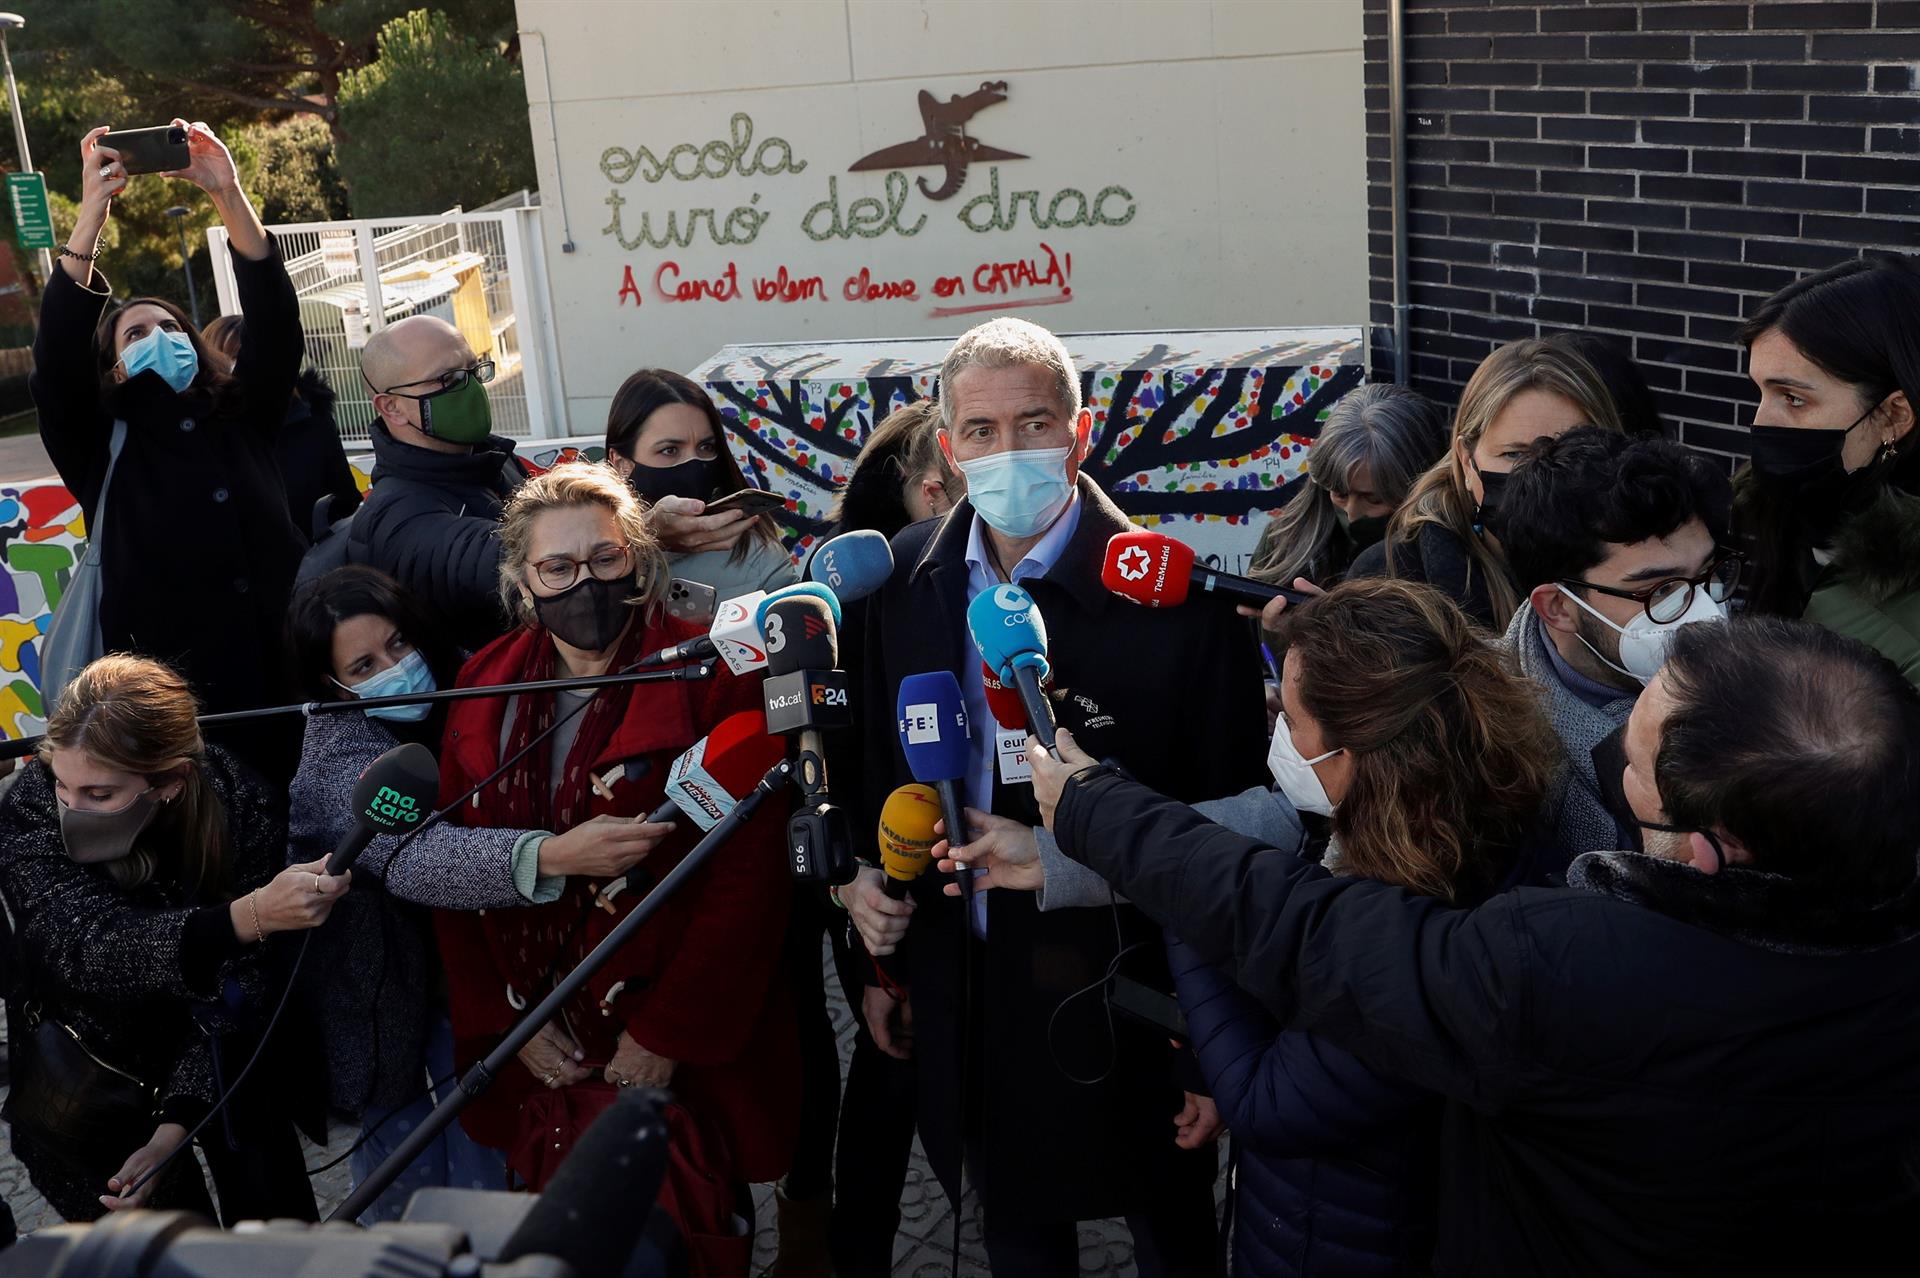 El TSJC ordena a la Generalitat "preservar la protección e intimidad" de la familia de Canet